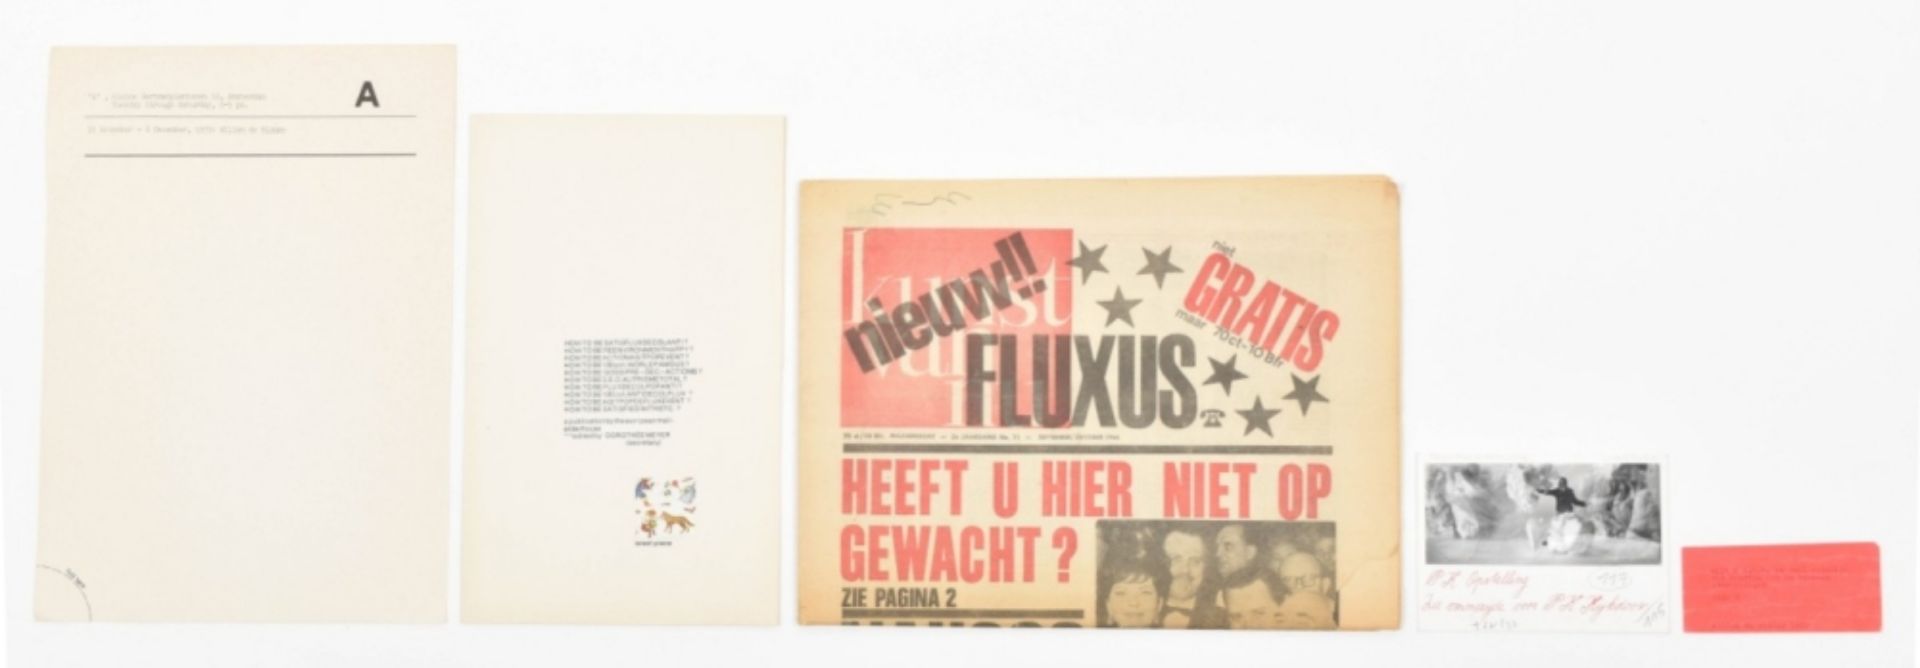 Willem de Ridder, original event card and documents